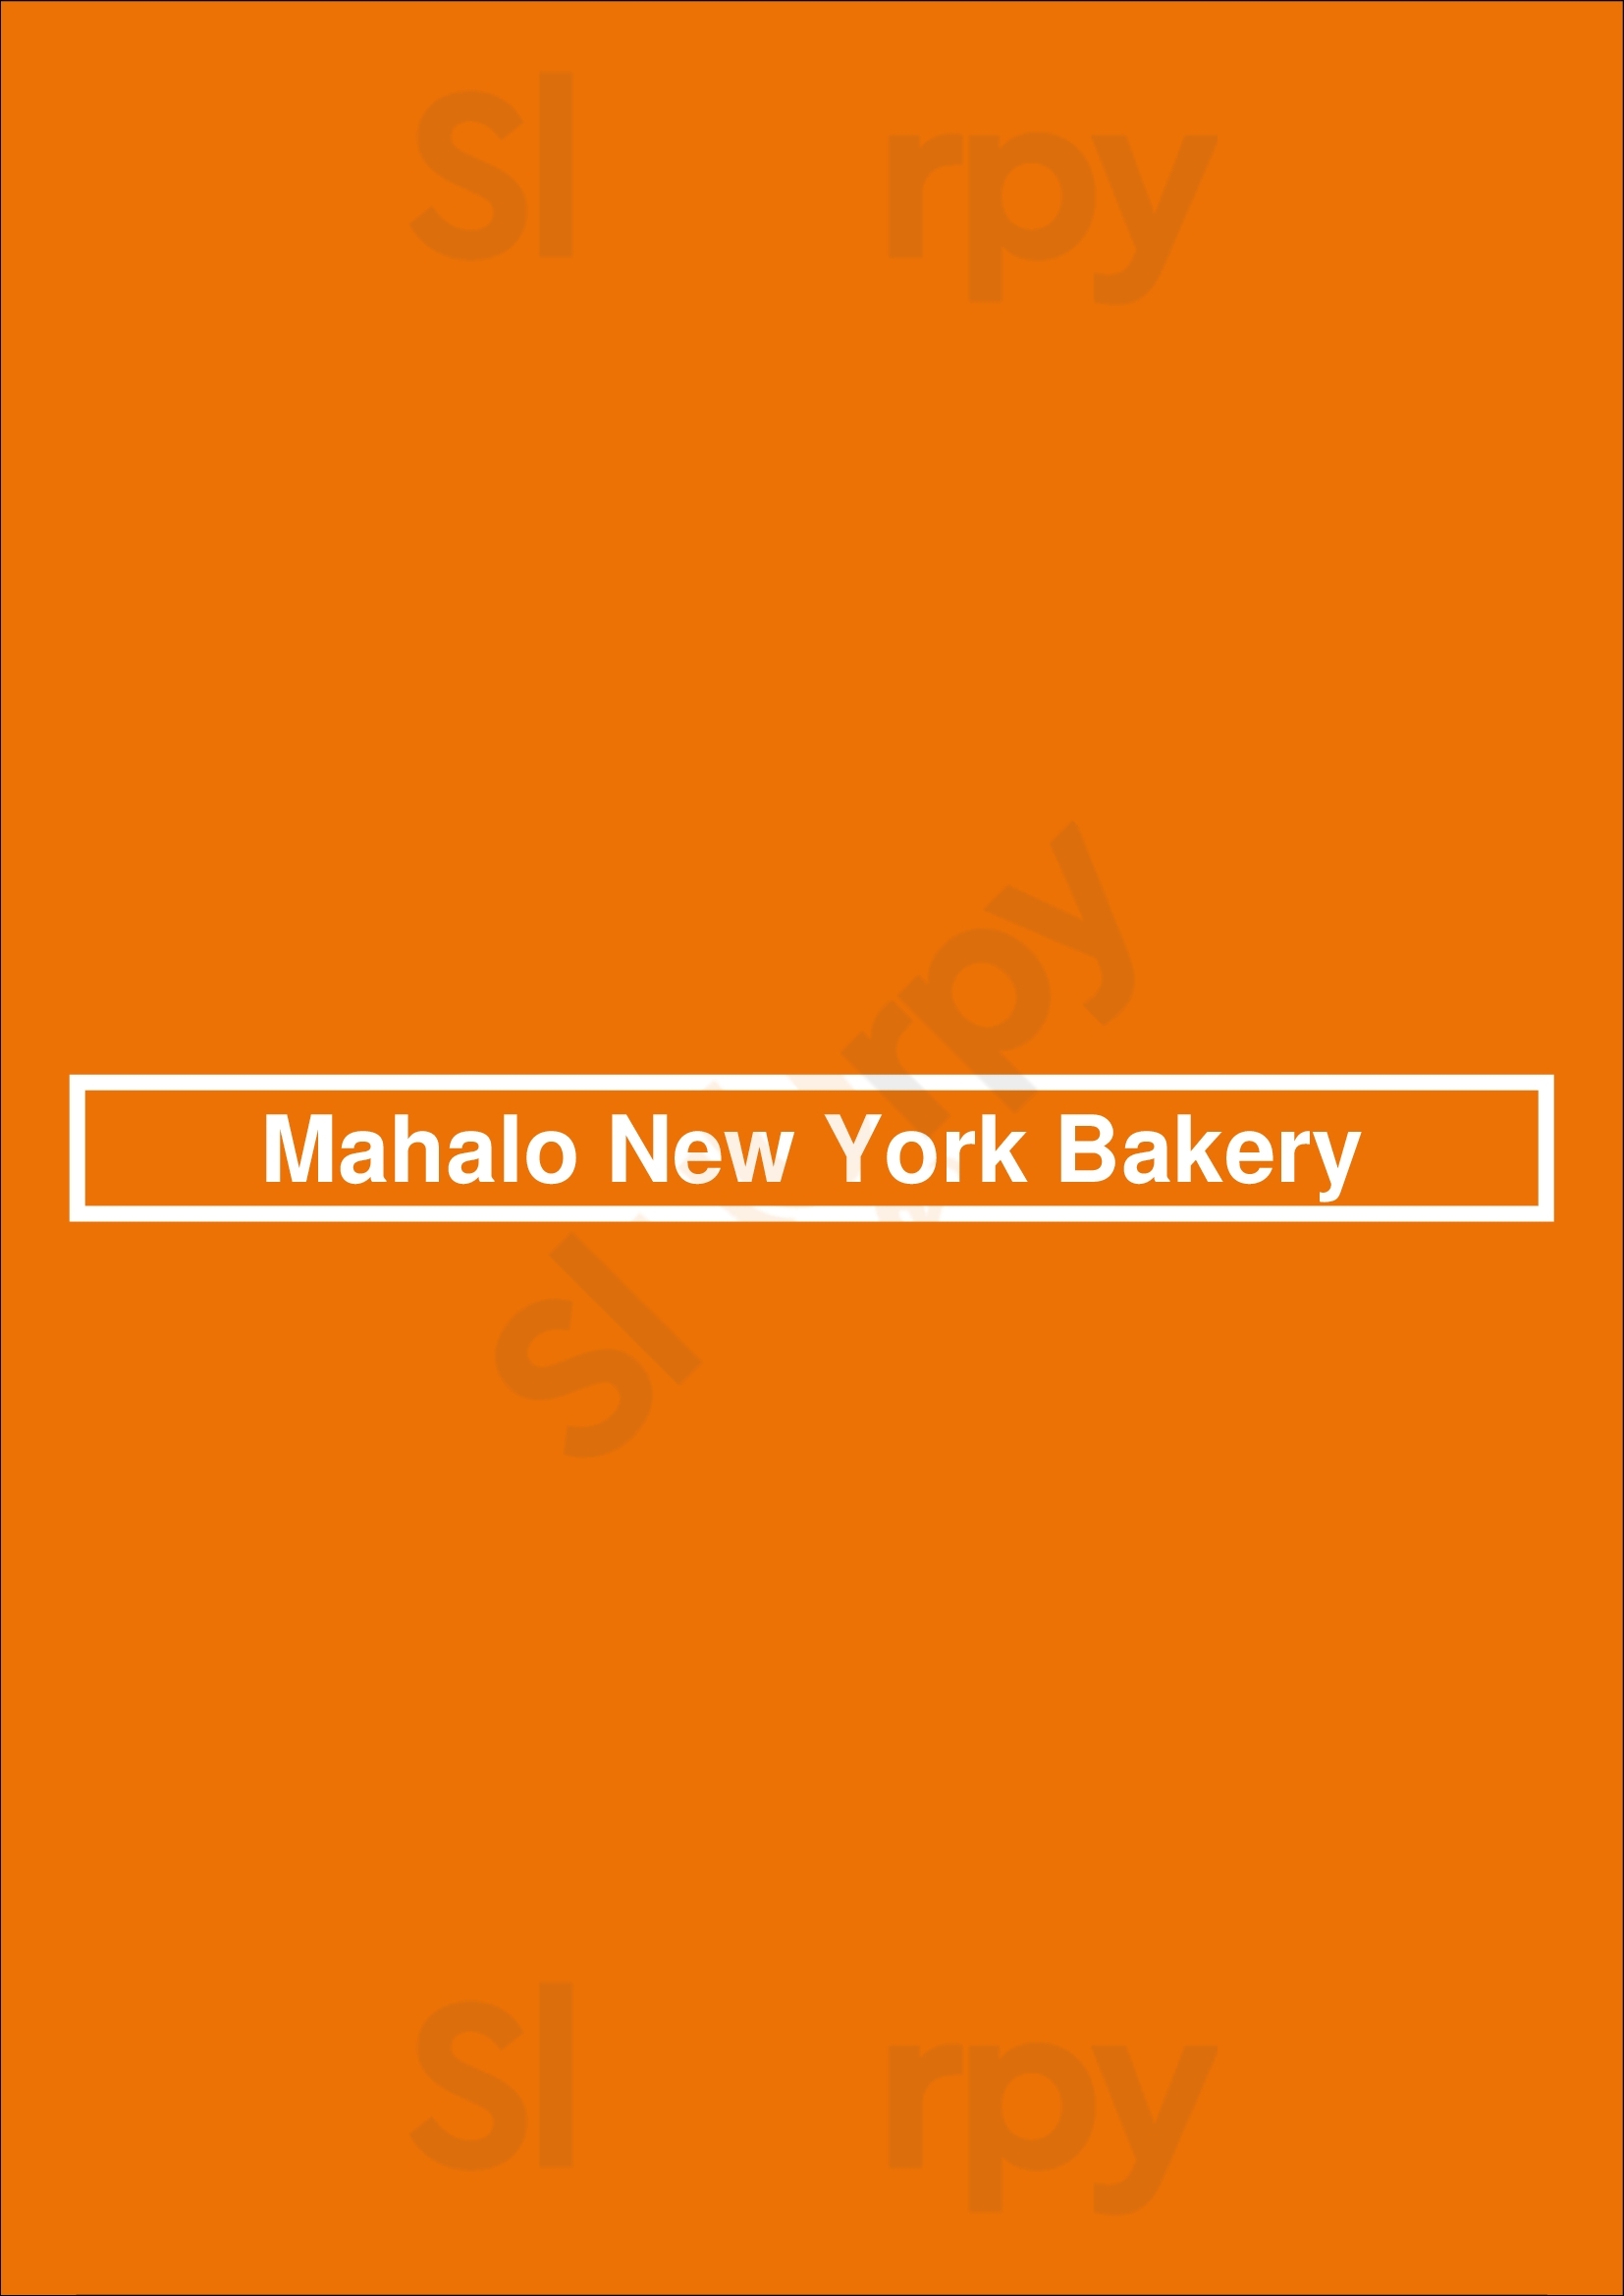 Mahalo New York Bakery Glendale Menu - 1